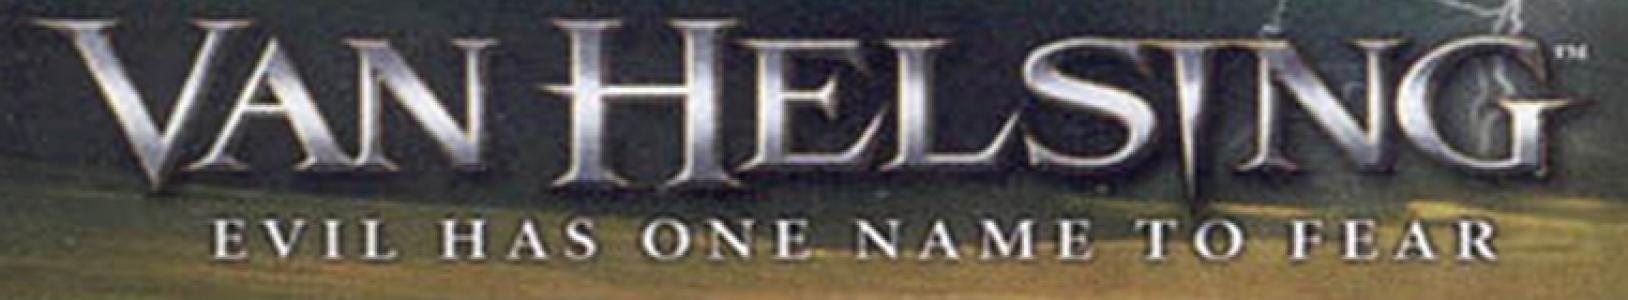 Van Helsing banner